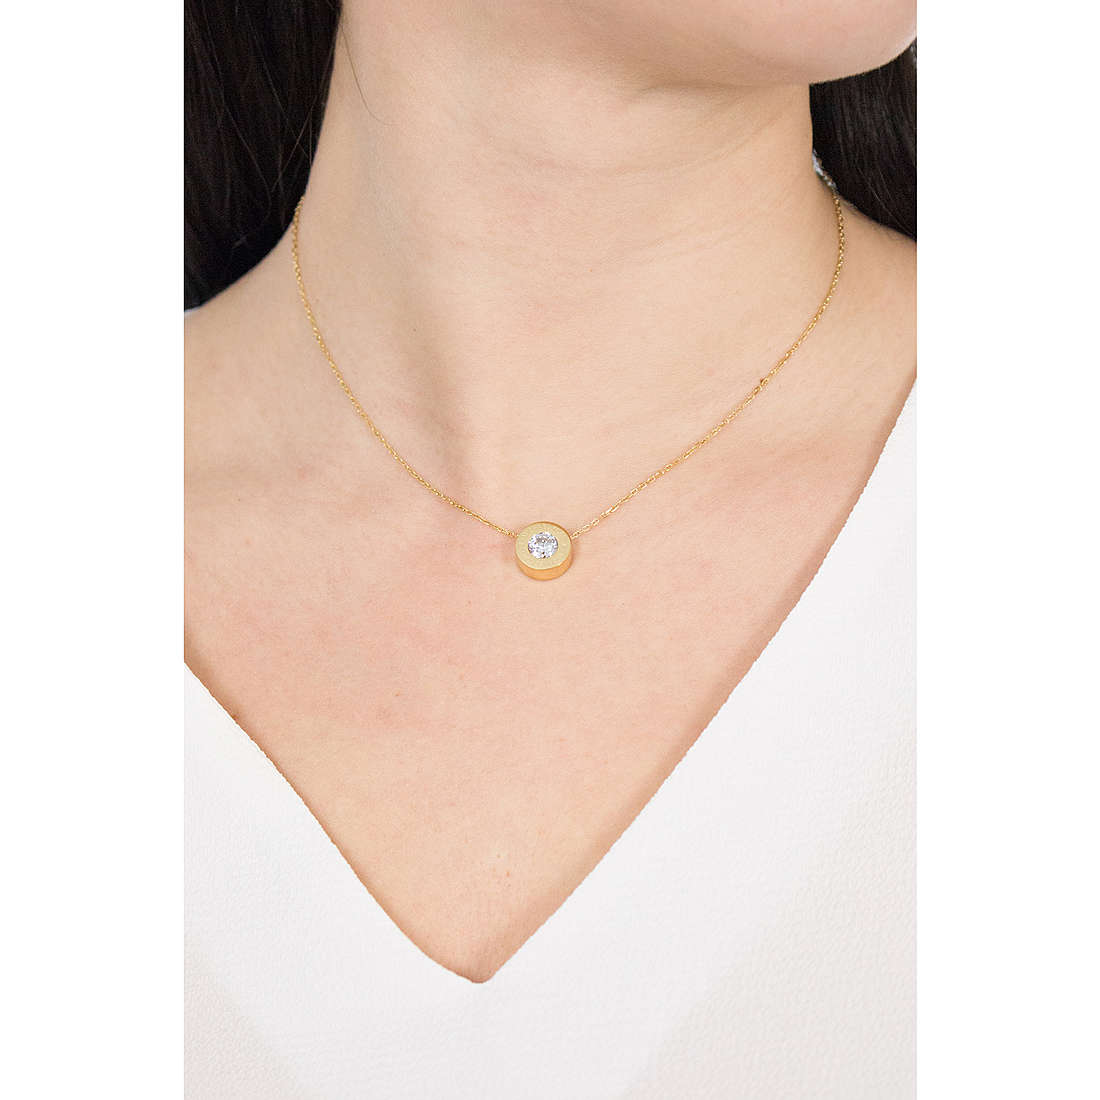 necklace woman jewel Michael Kors Brilliance MKJ5340710